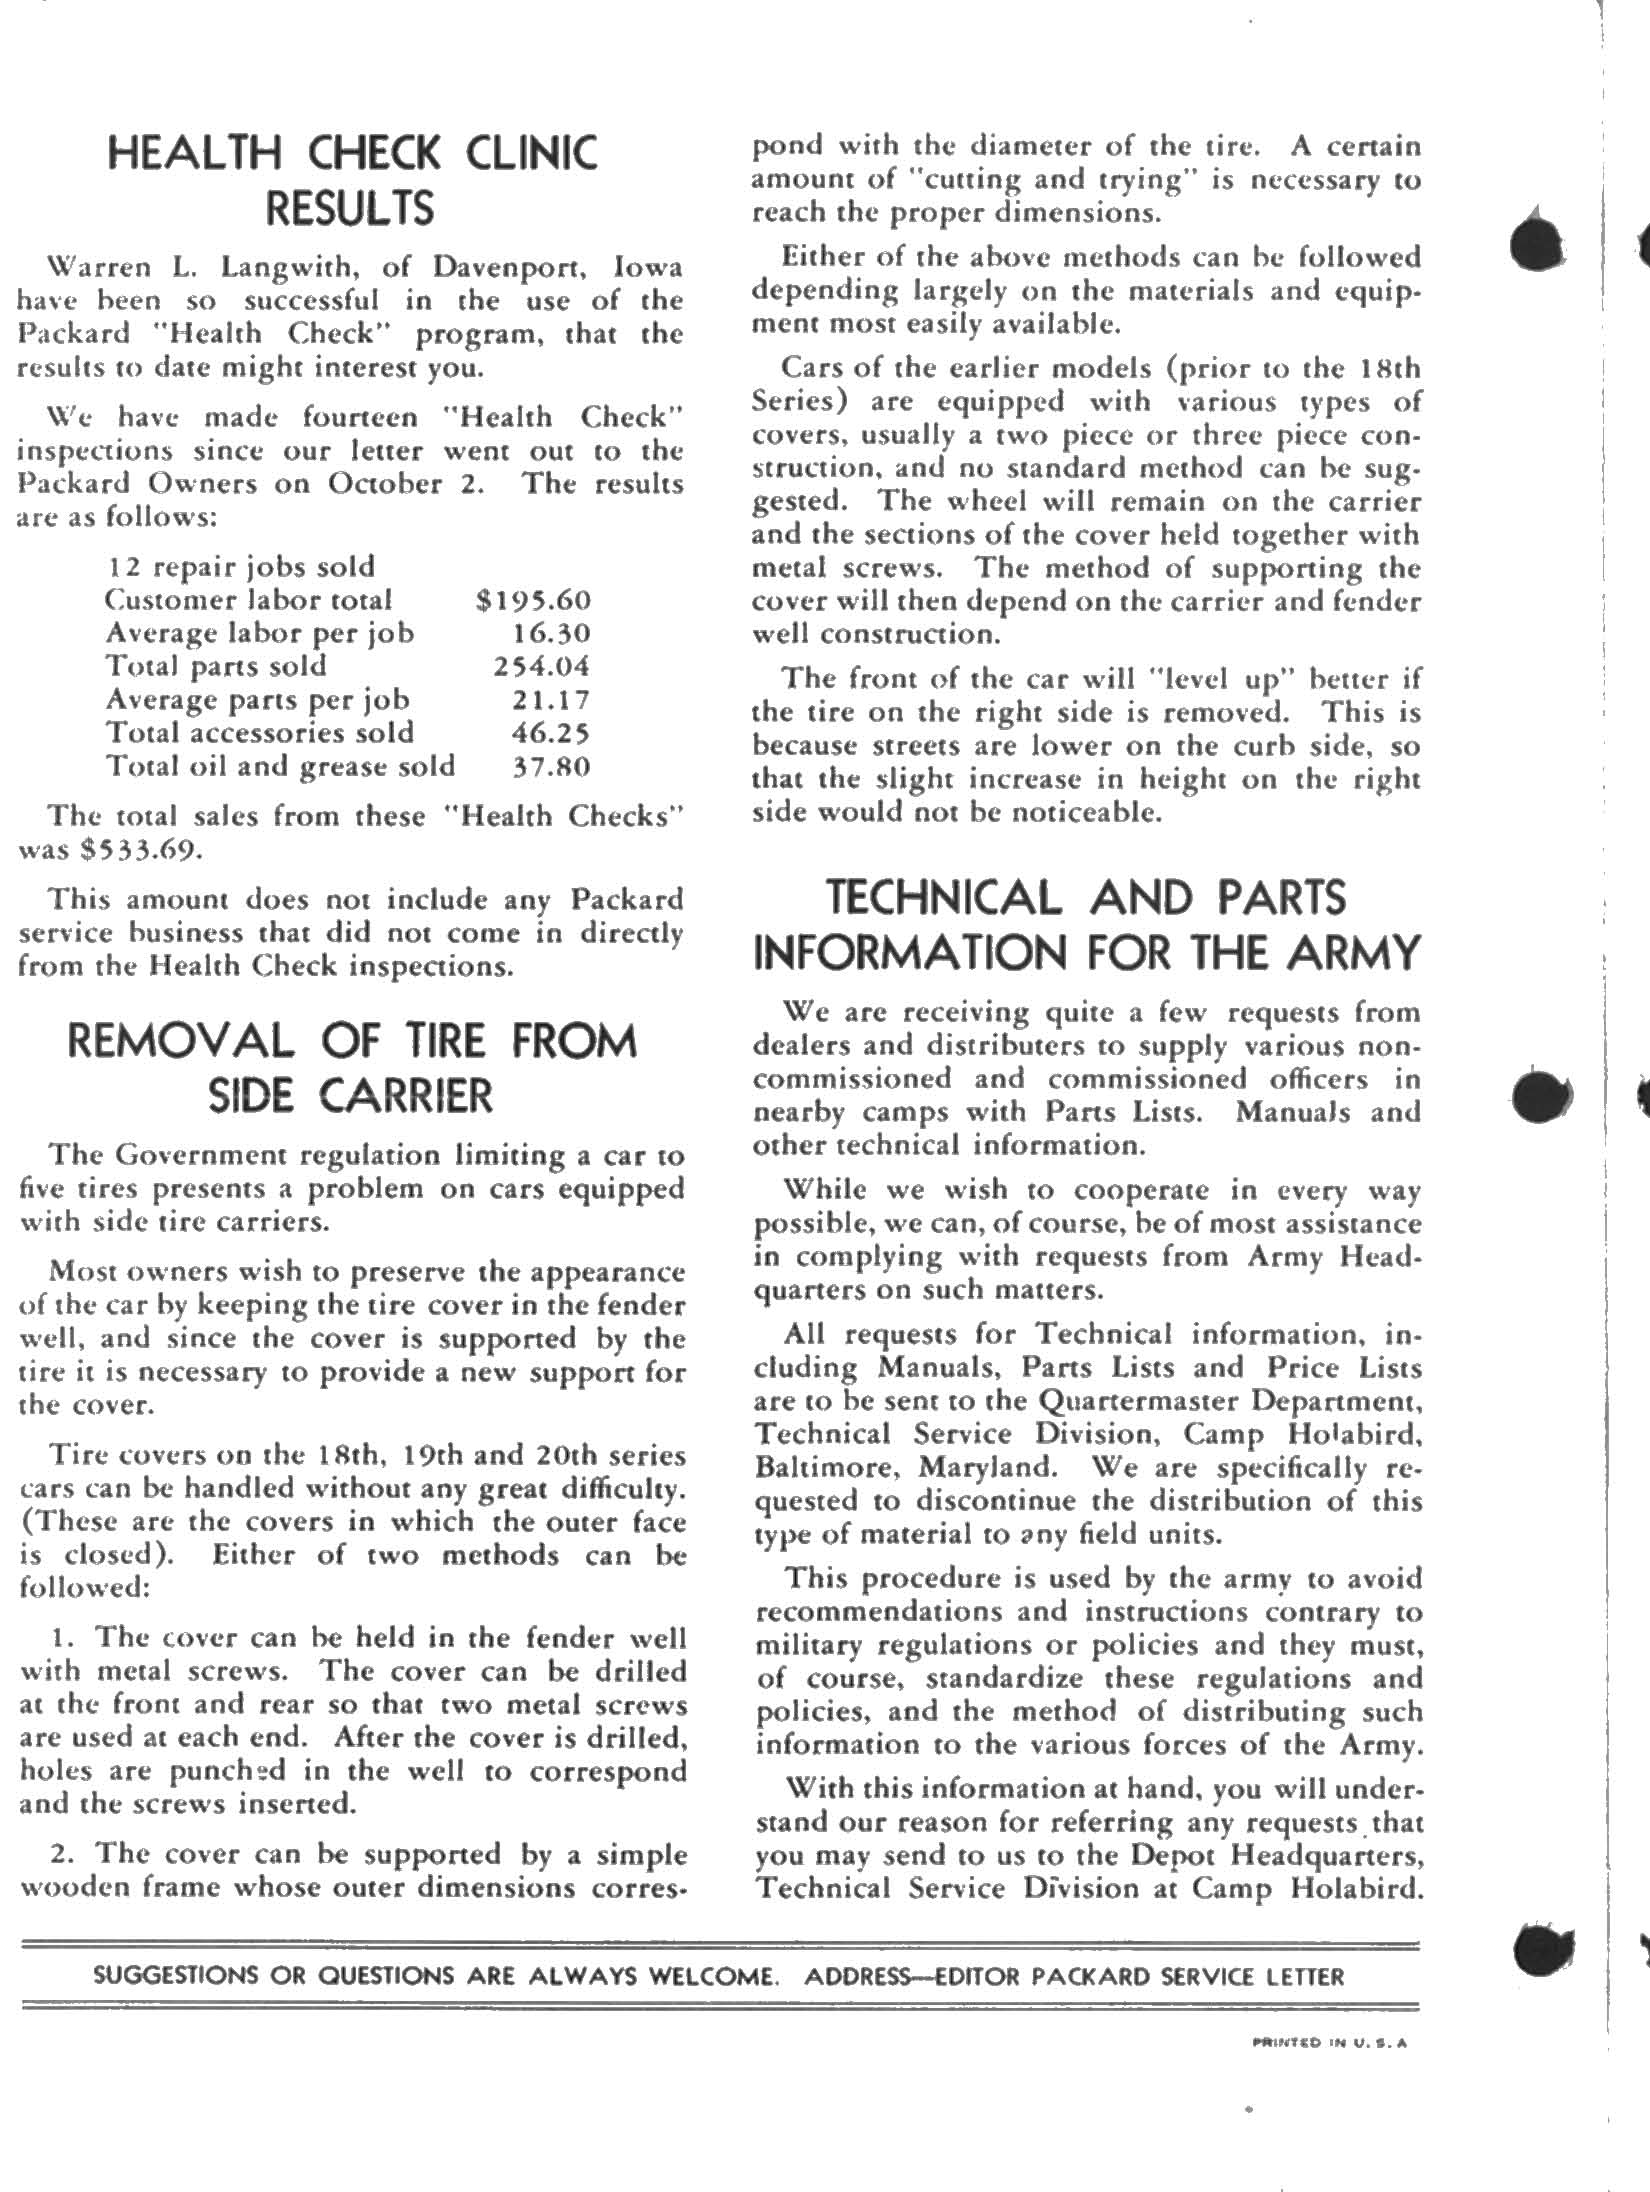 1942__Packard_Service_Letter-22-04